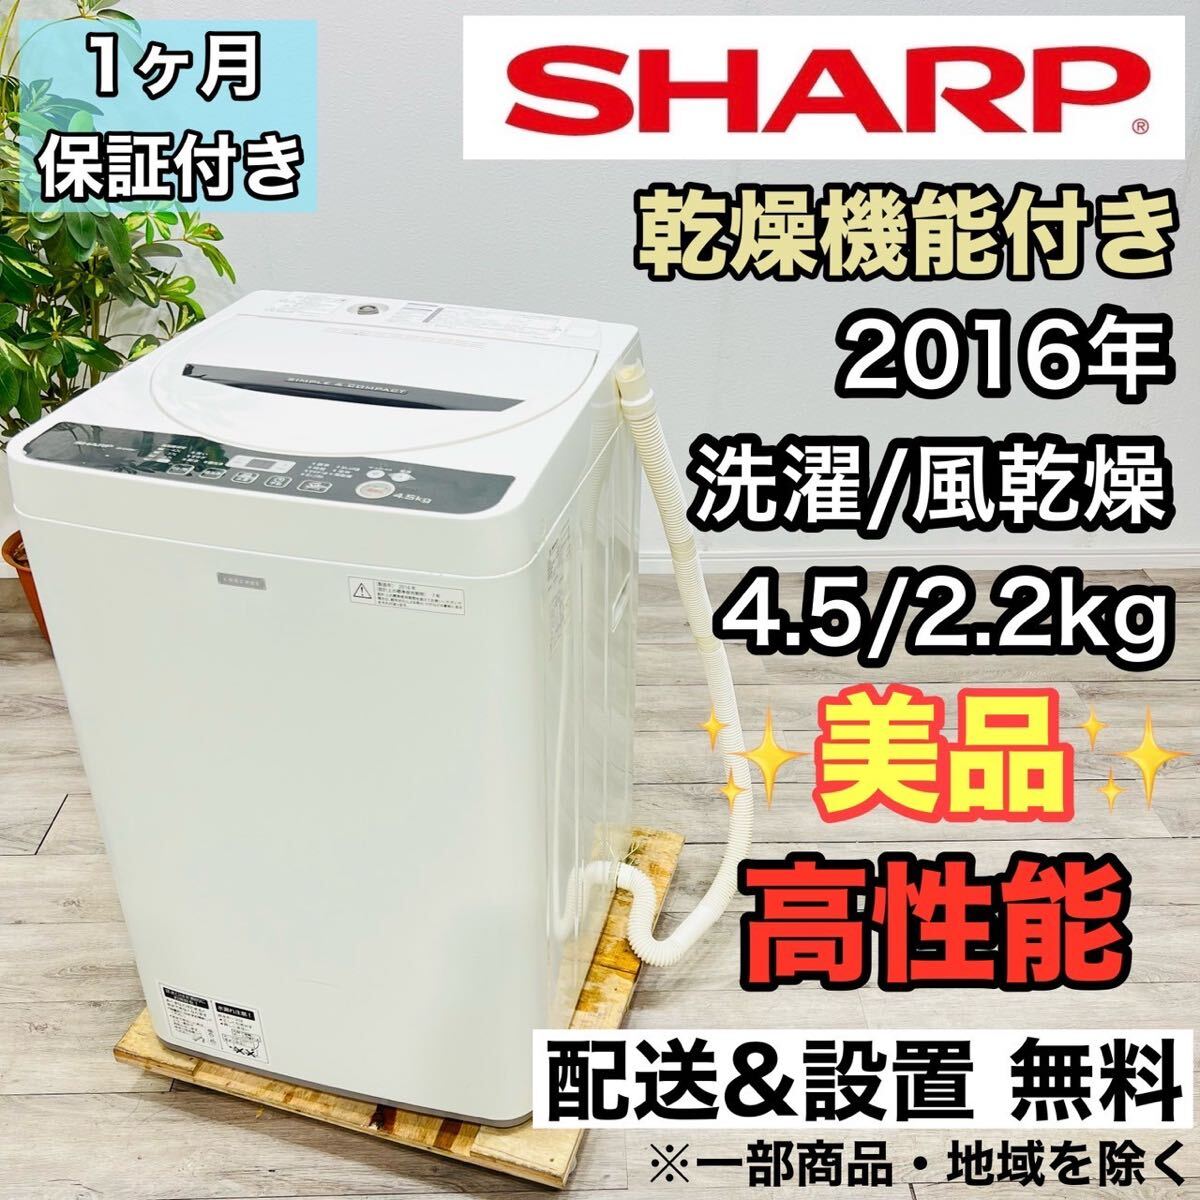 SHARP a2049 洗濯機 4.5kg 2016年製 -